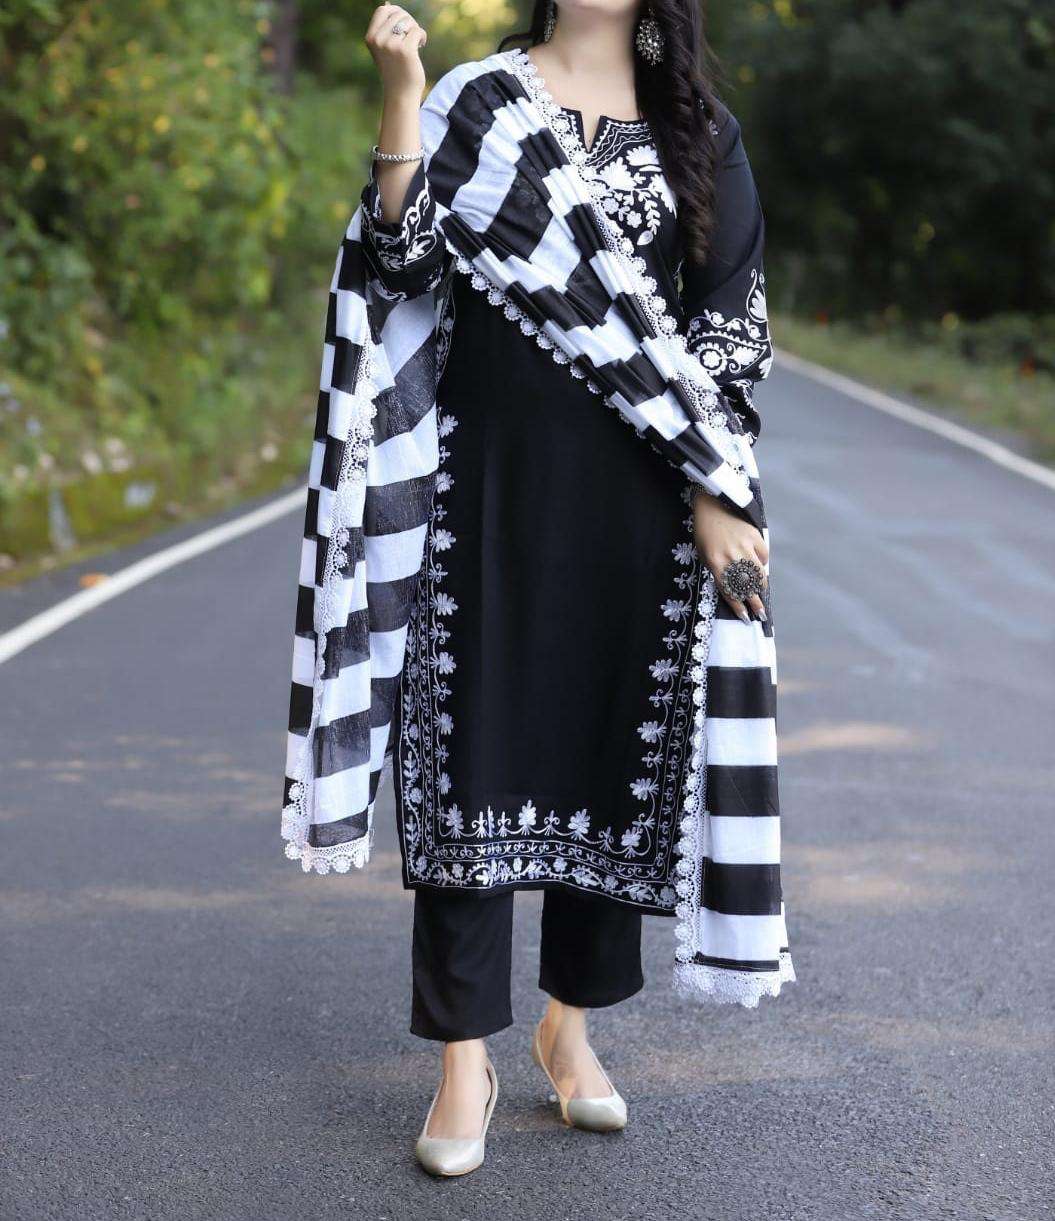 How to look beautiful in full sleeve salwar, Full sleeves ideas for salw...